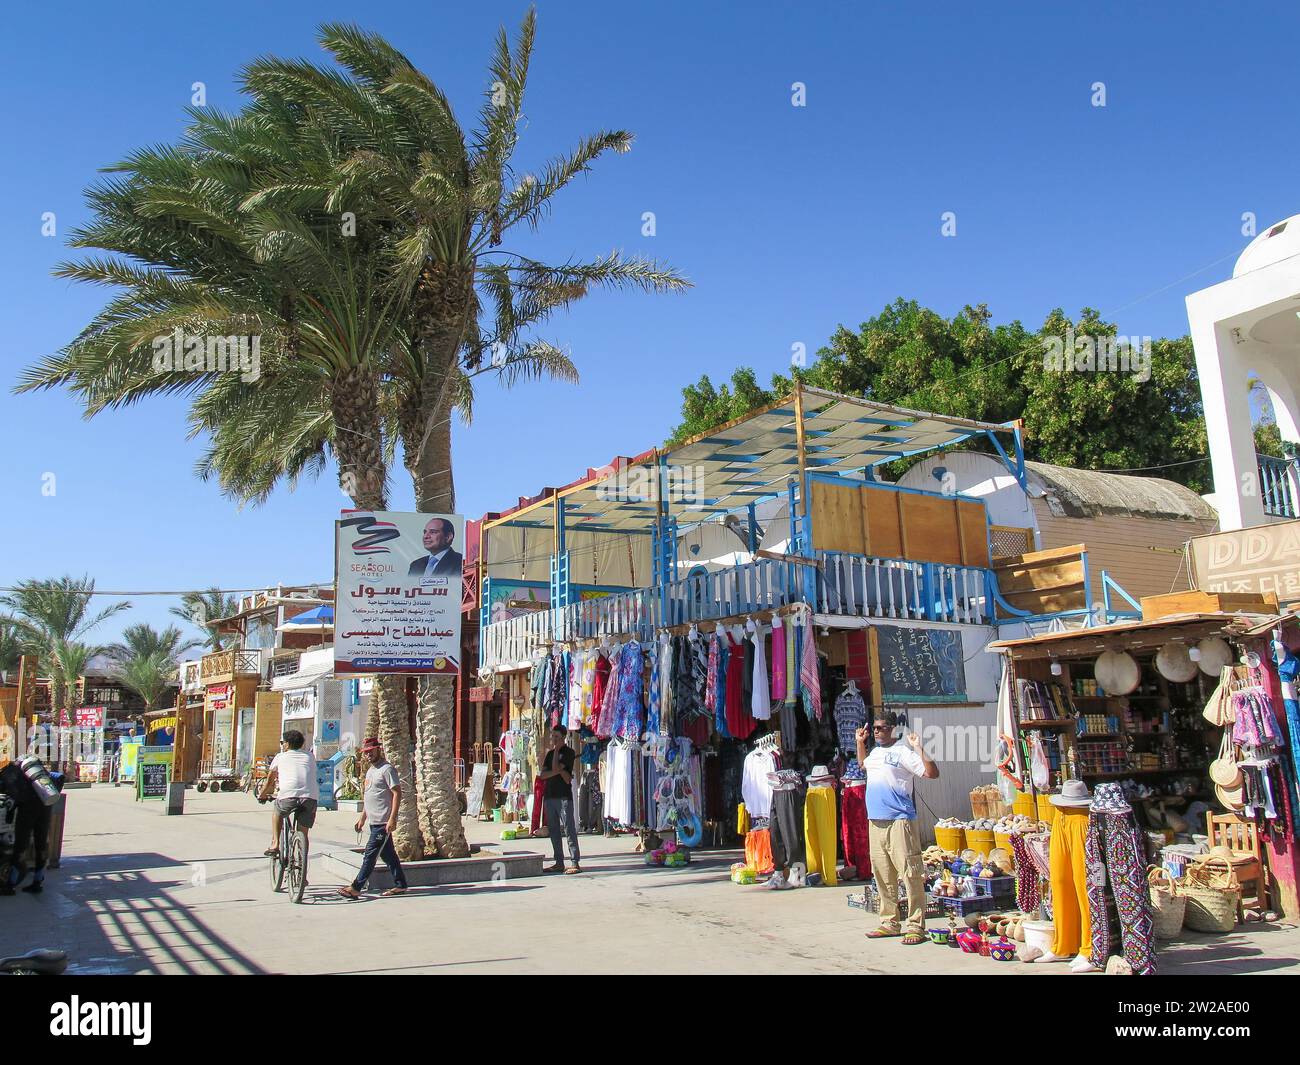 Straßenszene, Touristen, Geschäfte, Fußgängerzone, El Masbat Street, Dahab, Sinai, Ägypten Foto Stock